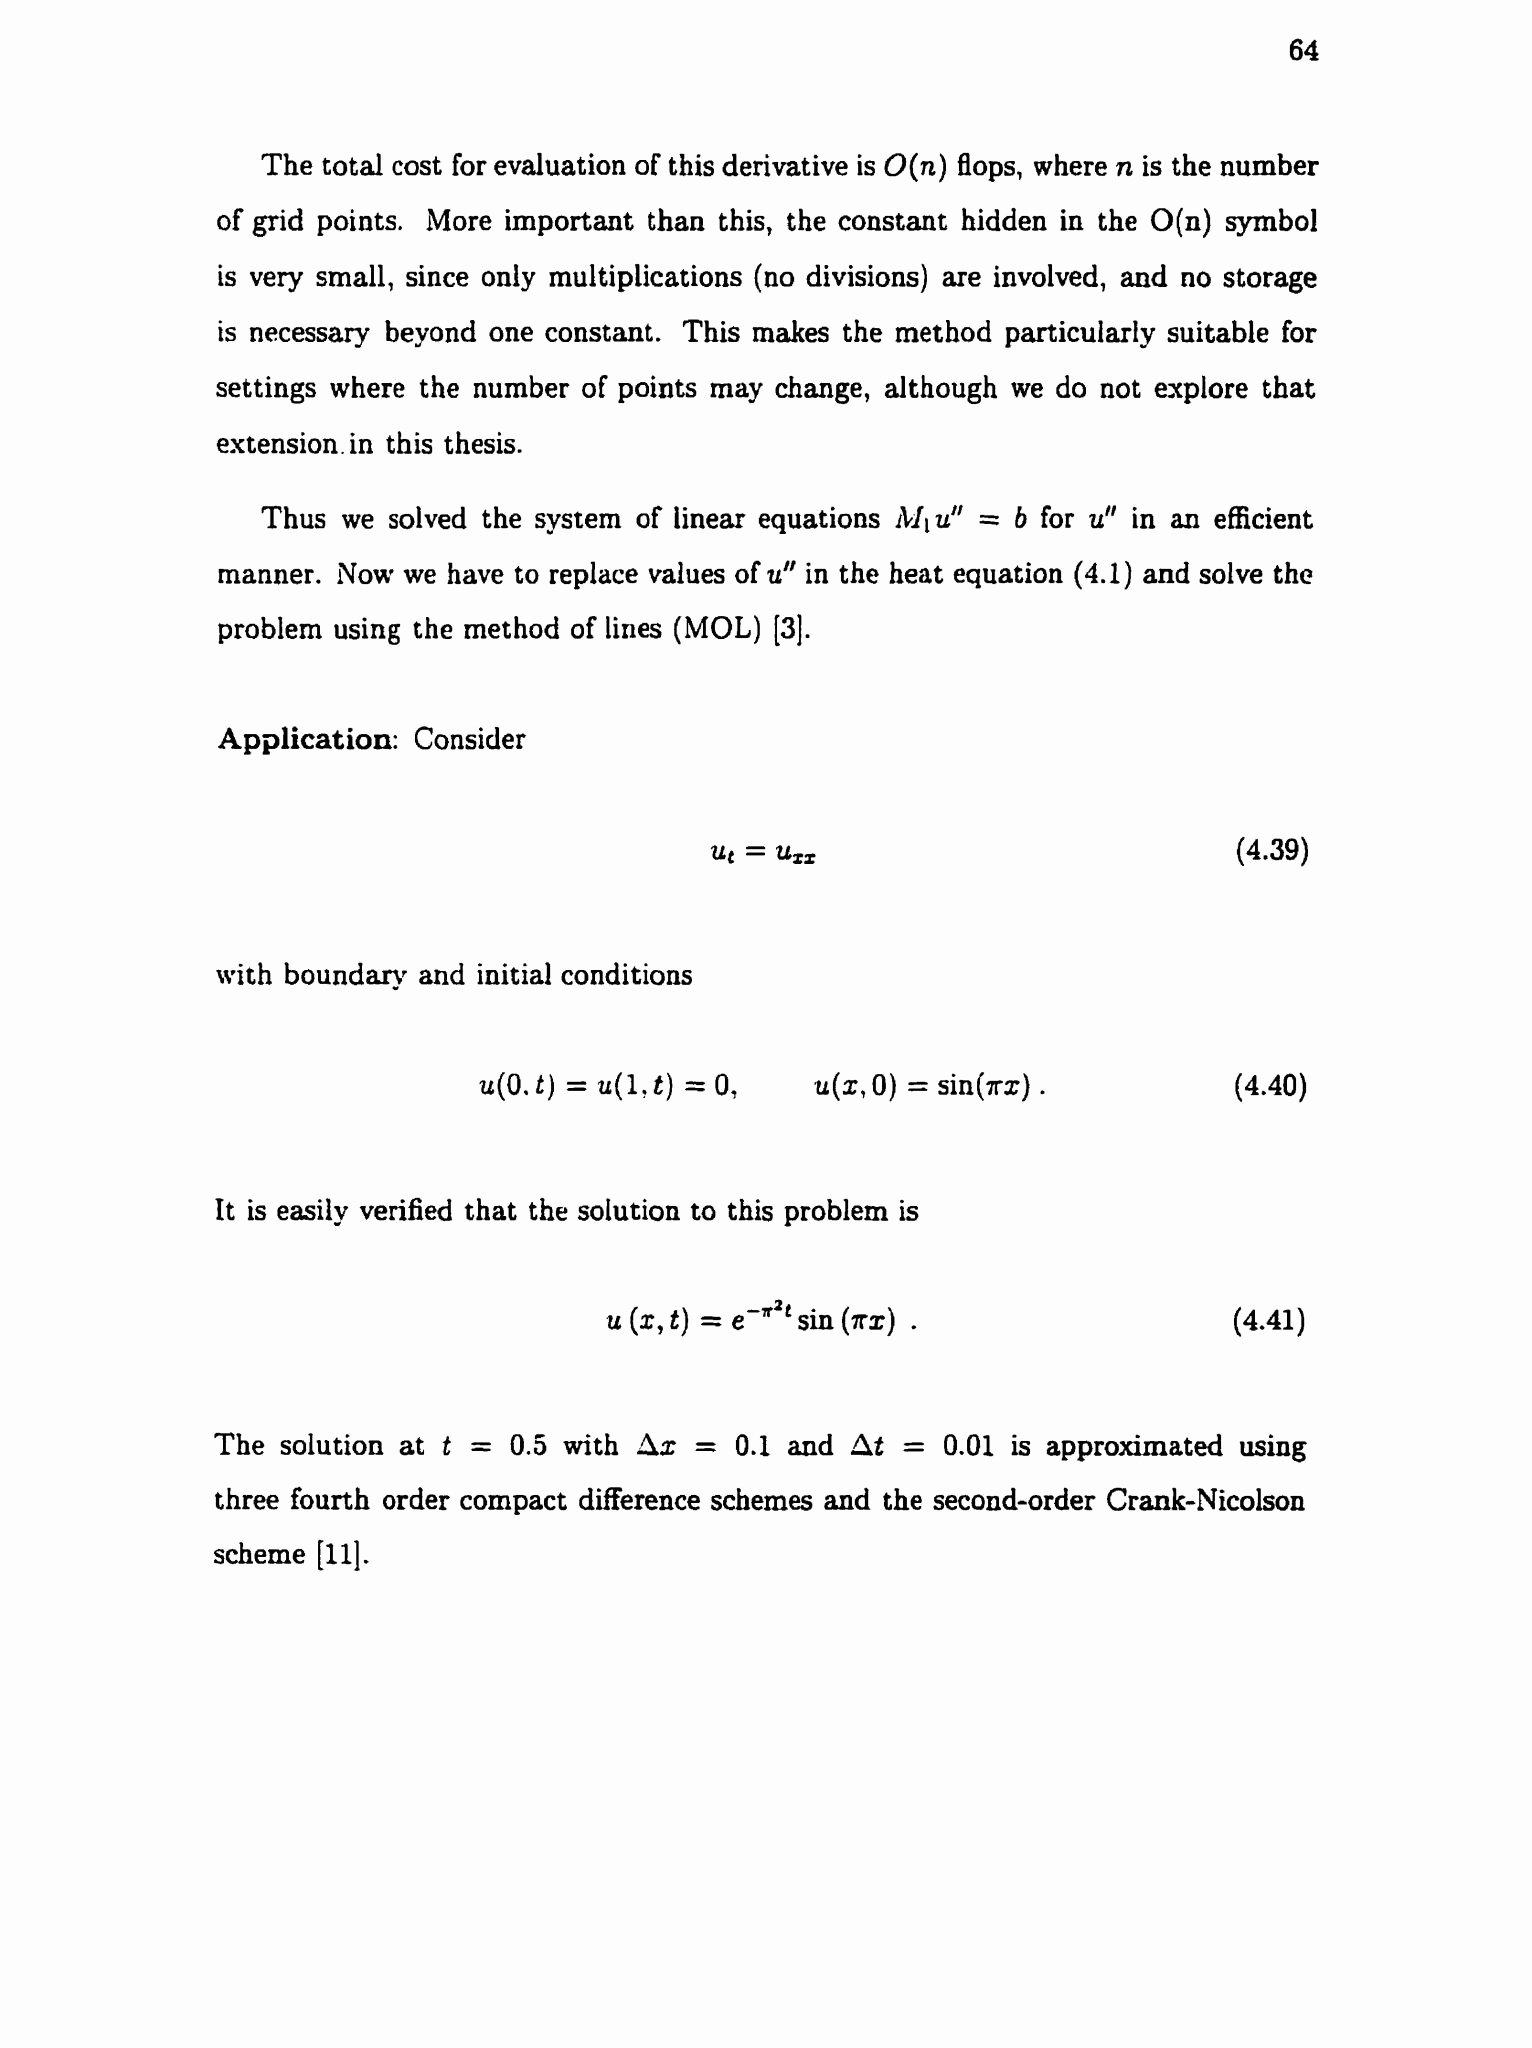 Linear Equations Worksheet Pdf Lovely solving Linear Equations Word Problems Worksheet Pdf